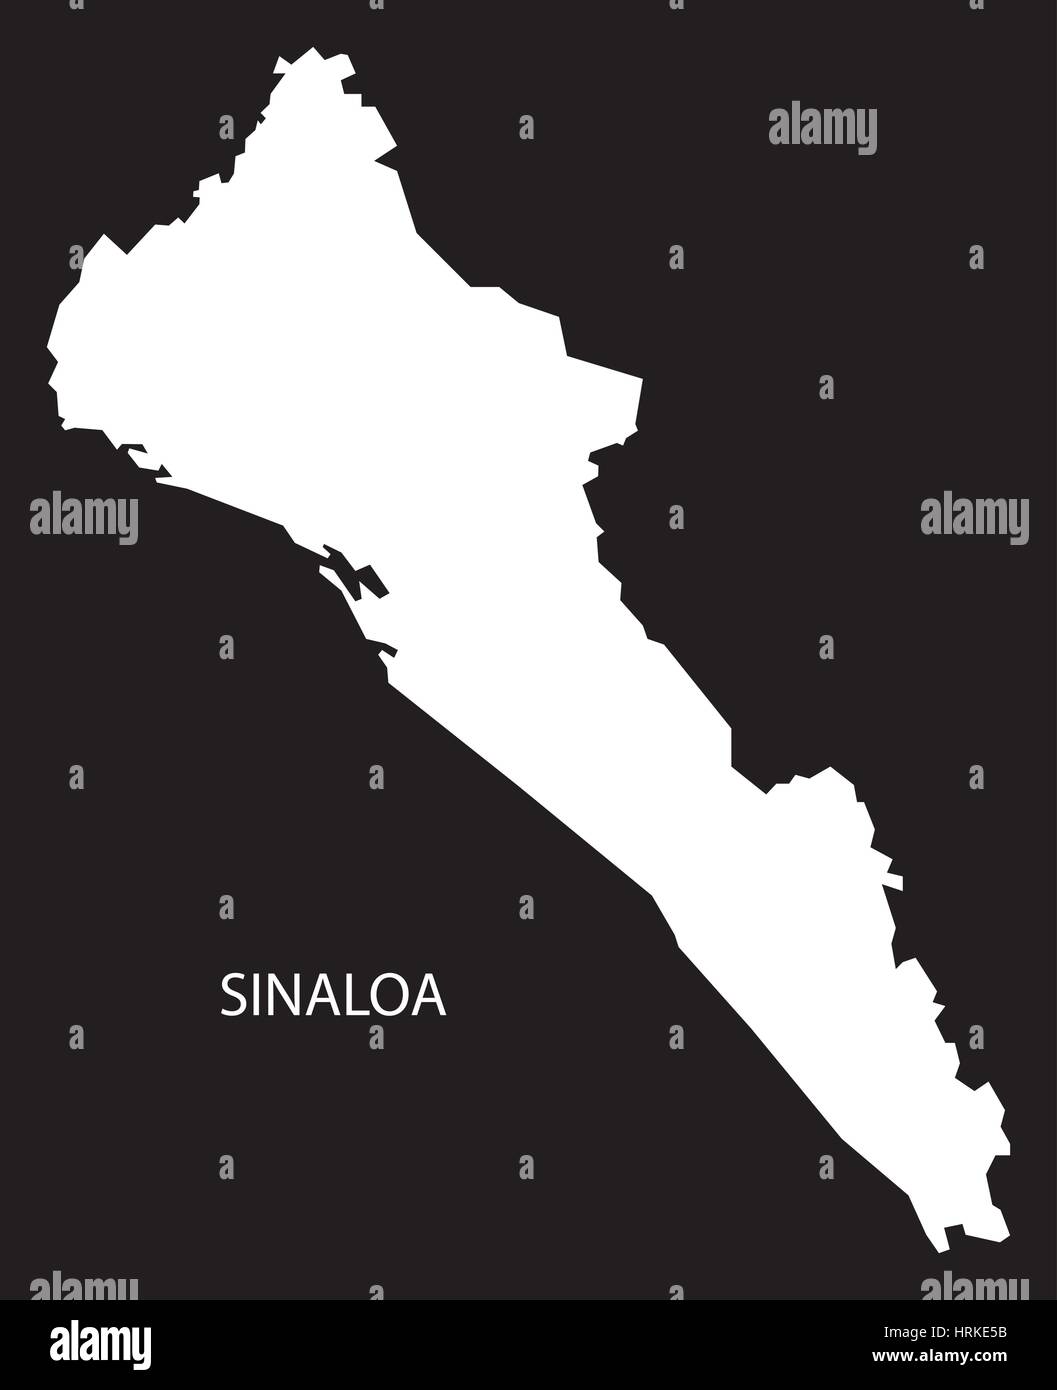 Sinaloa Mexiko Karte schwarz invertiert silhouette Stock Vektor